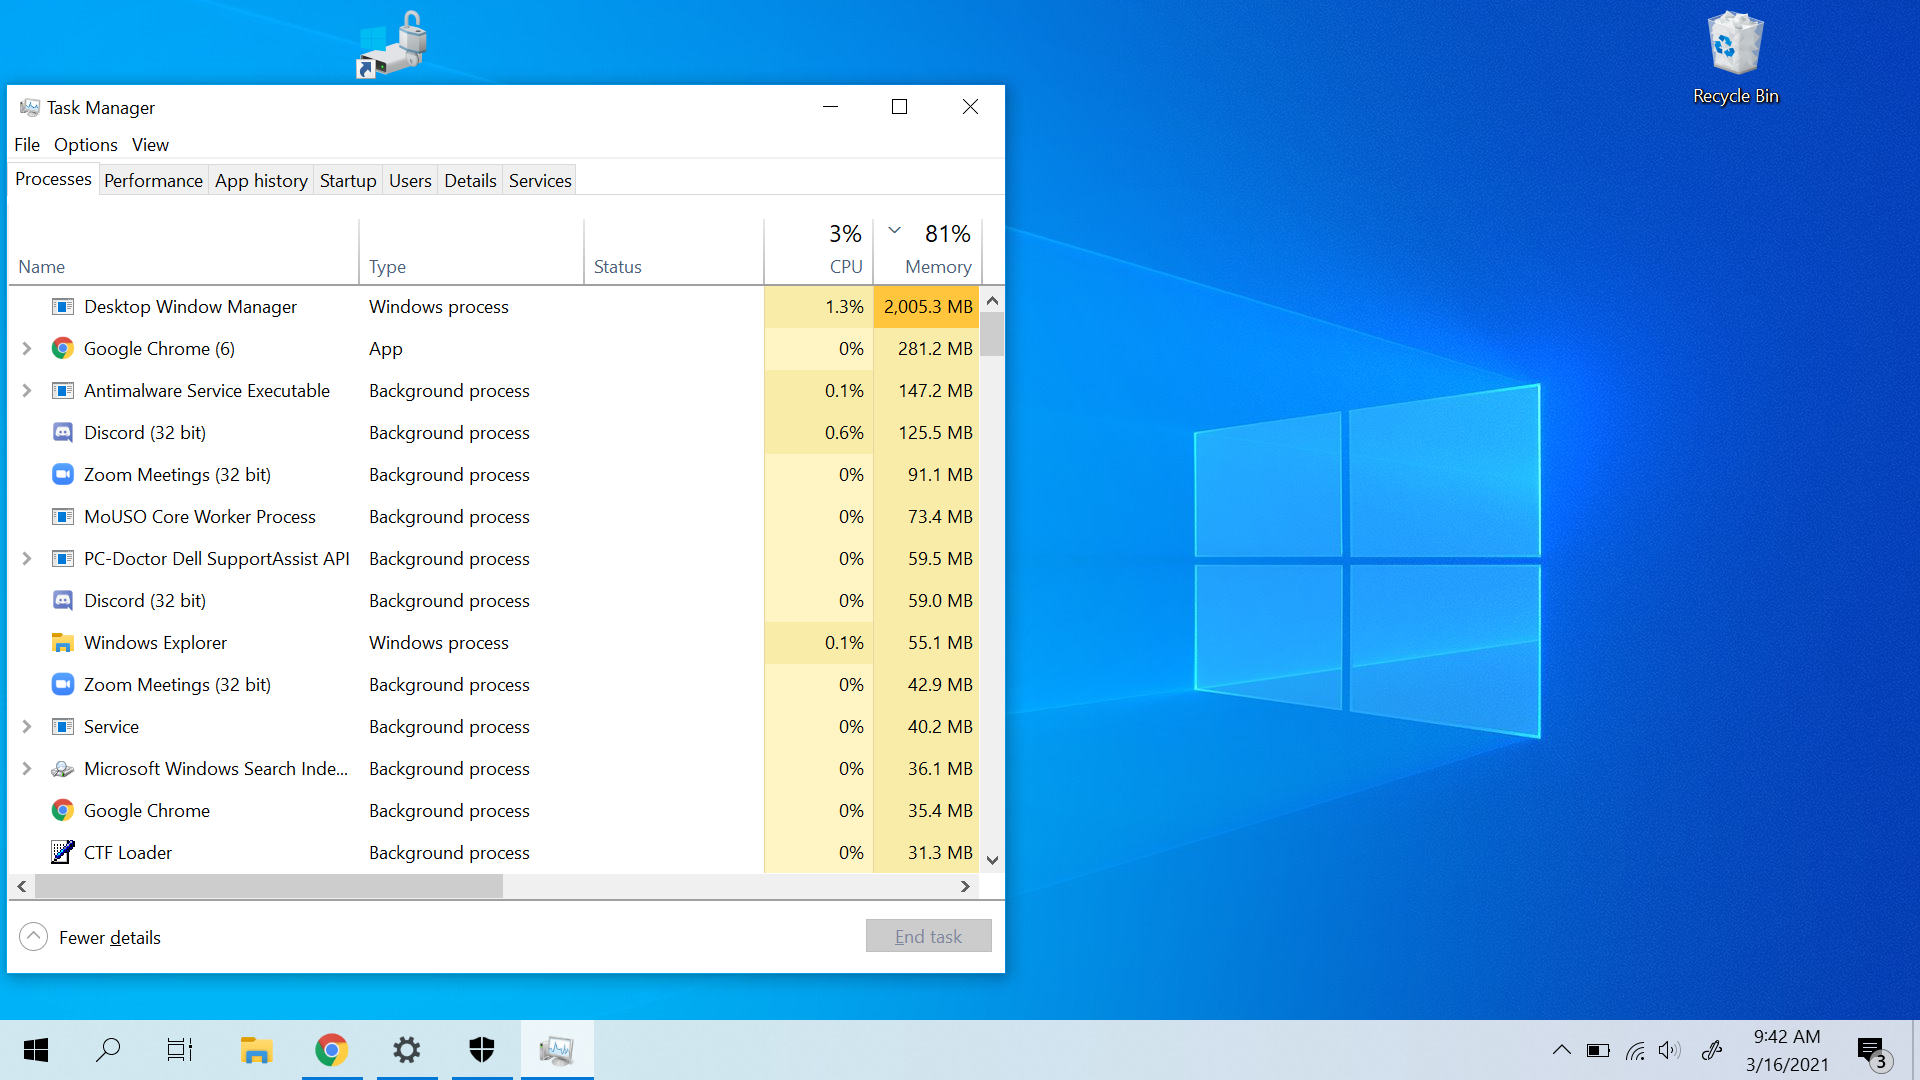 desktop window manager taking too much RAM db2c04db-5a15-4493-8ed0-f00fc213c588?upload=true.png